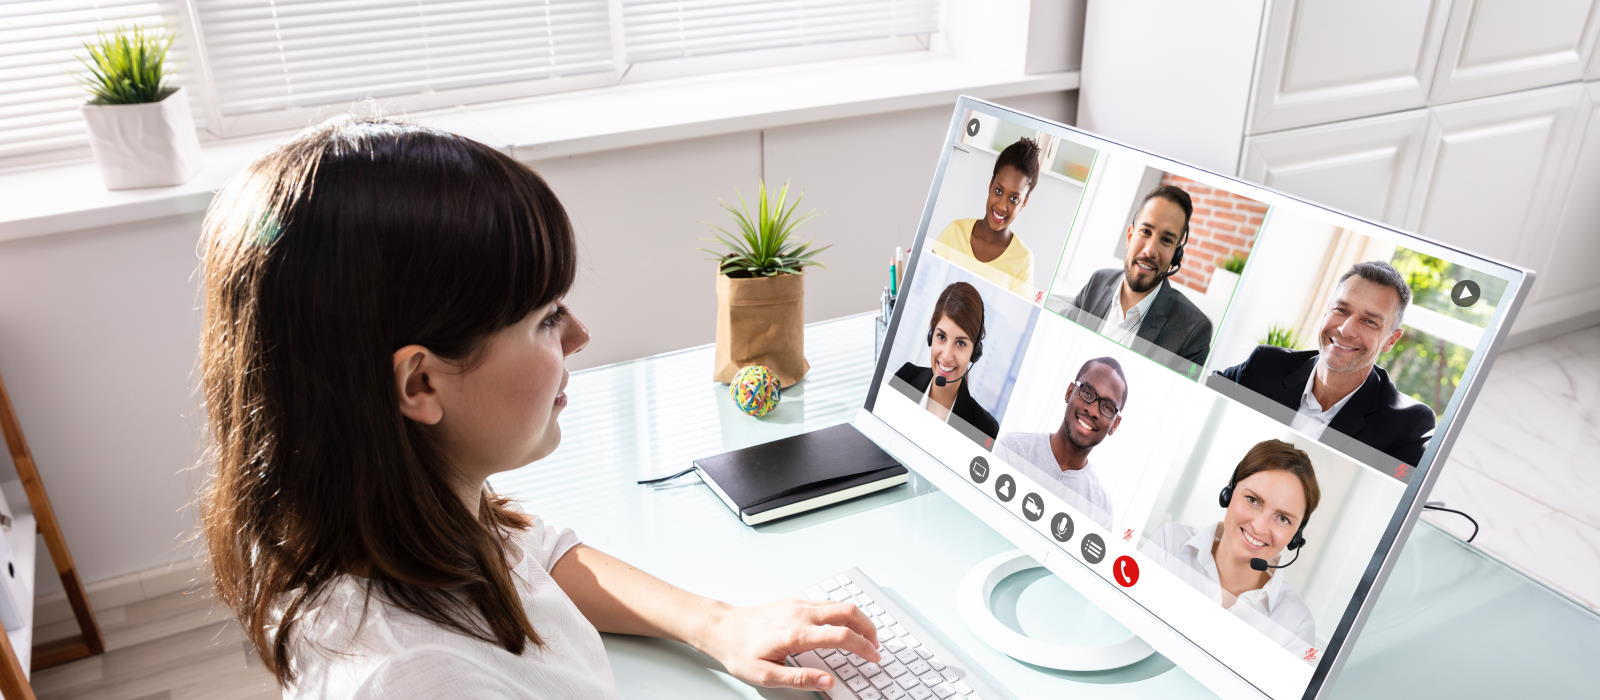 Online remote virtual team buiding image